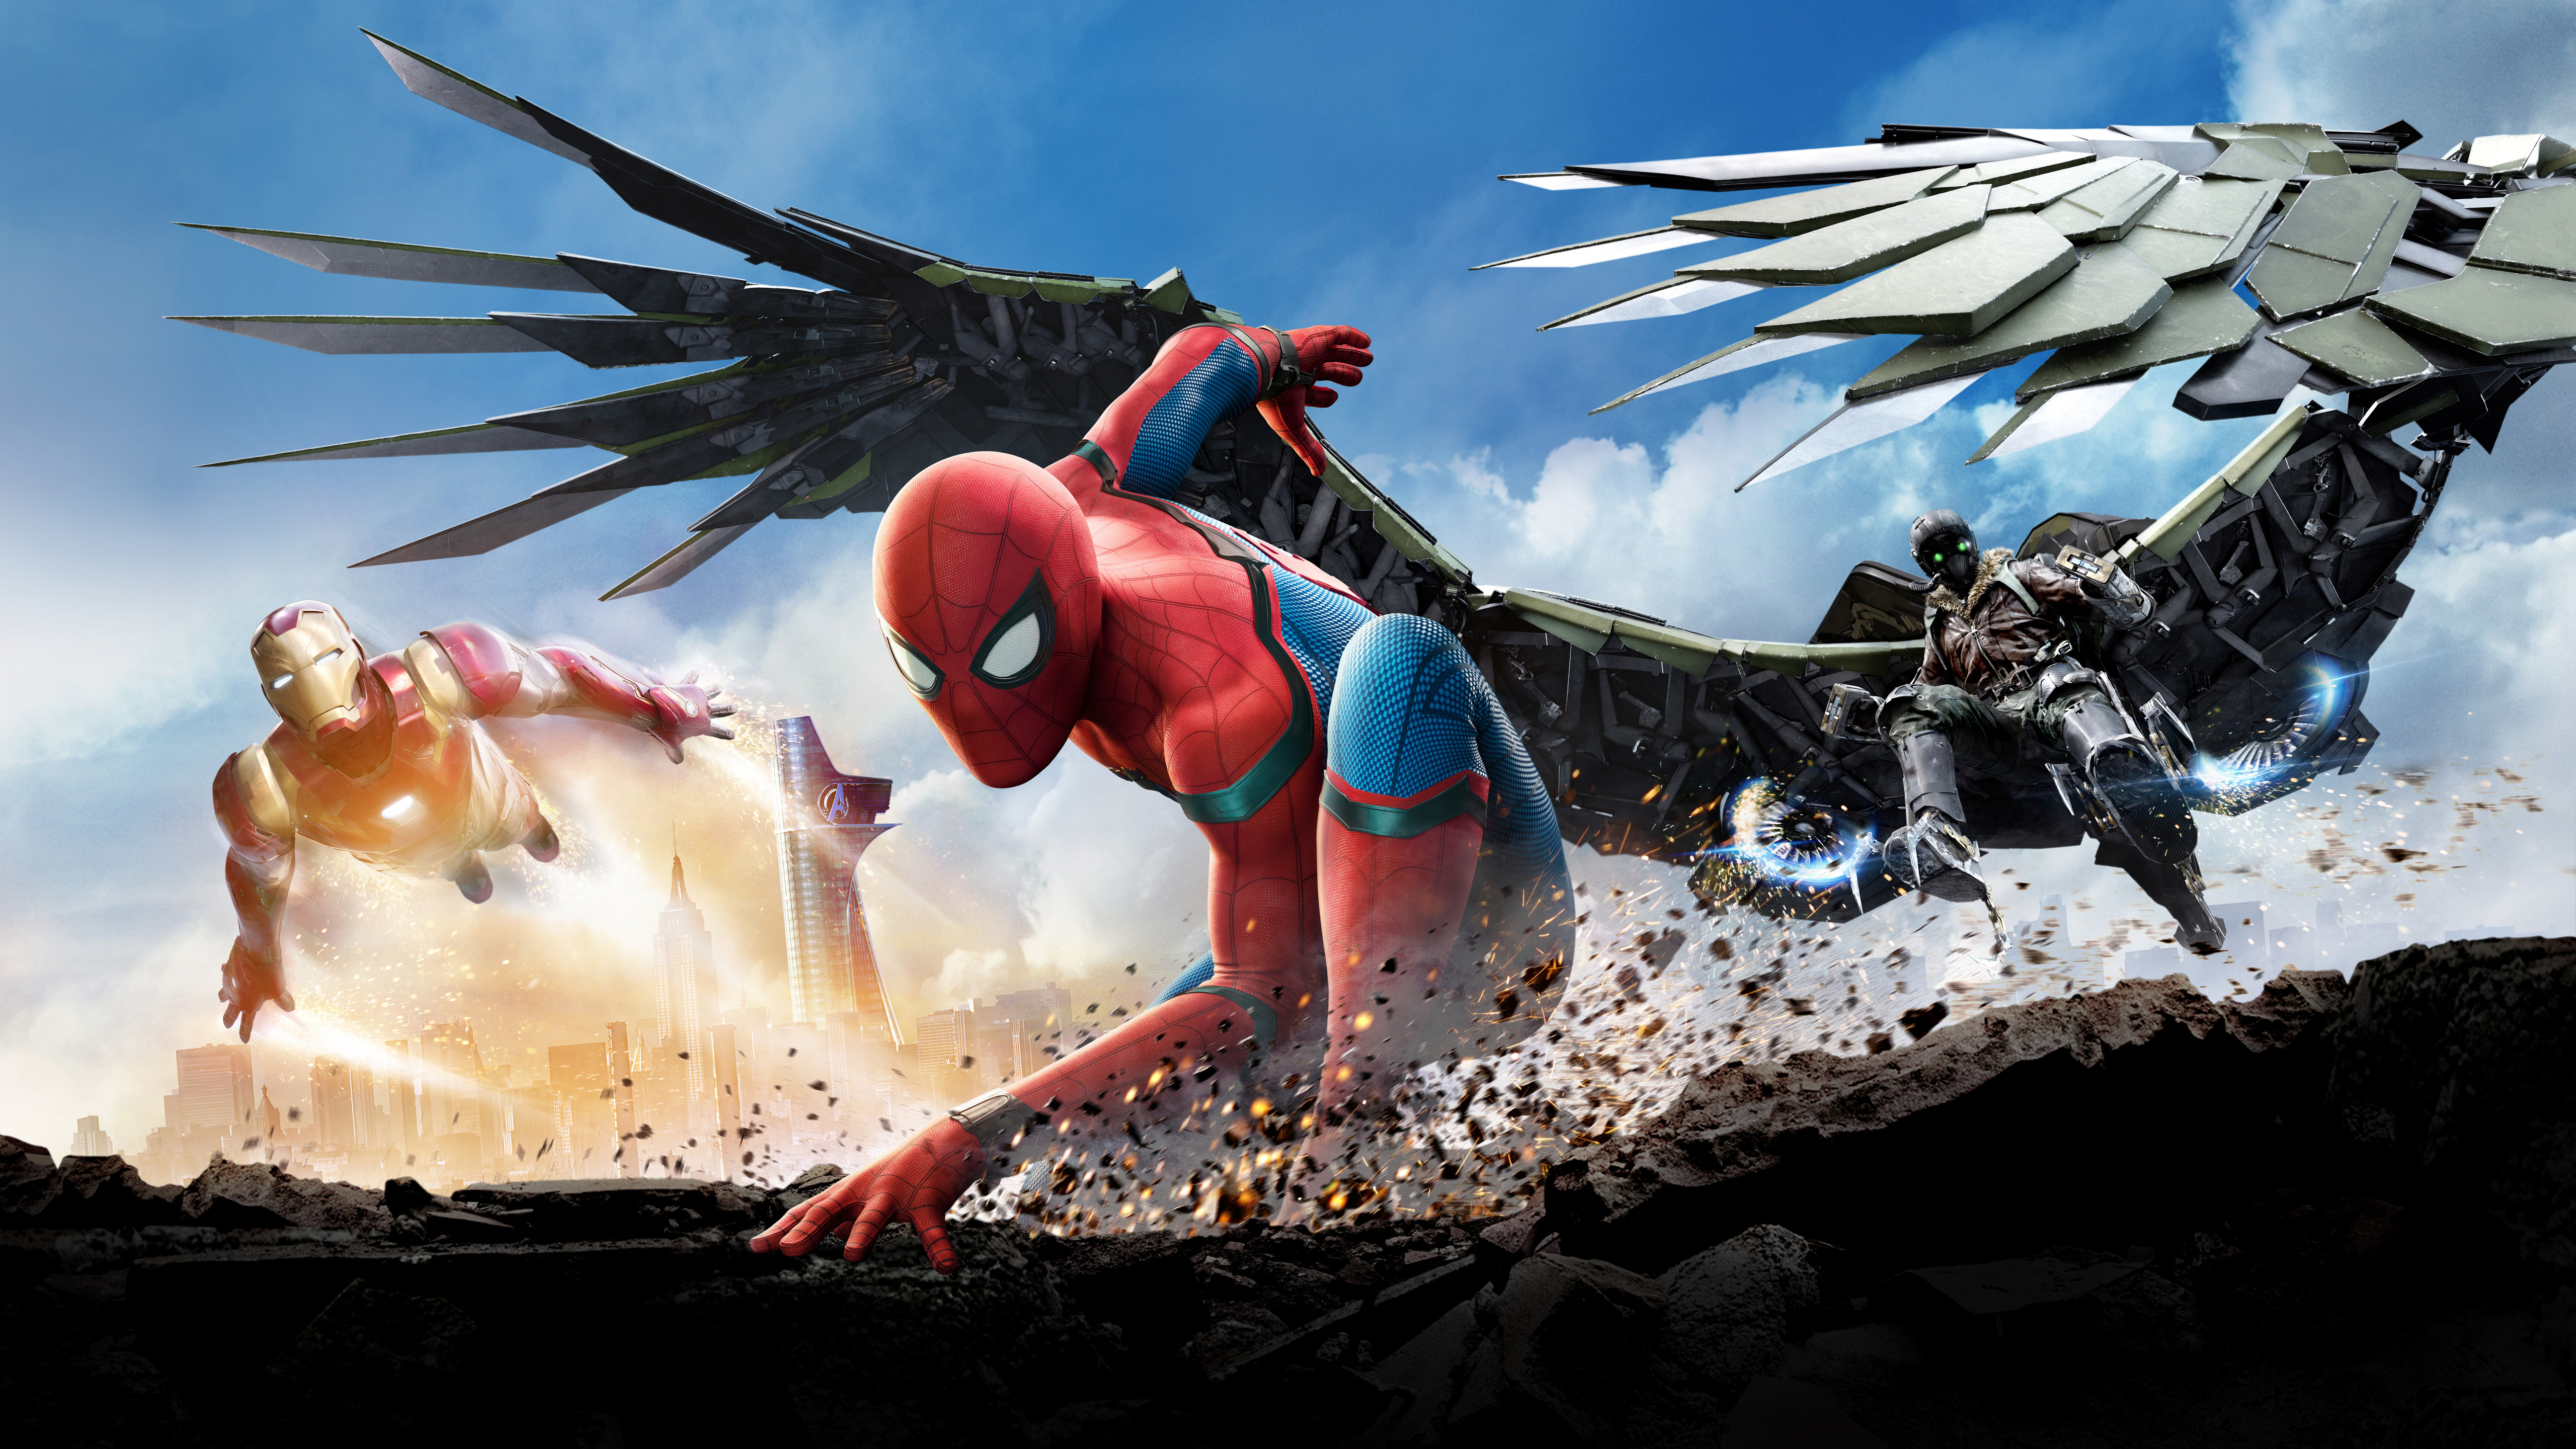 Wallpaper Spider-Man: Homecoming, 4k, 5k, 8k, Movies #13795